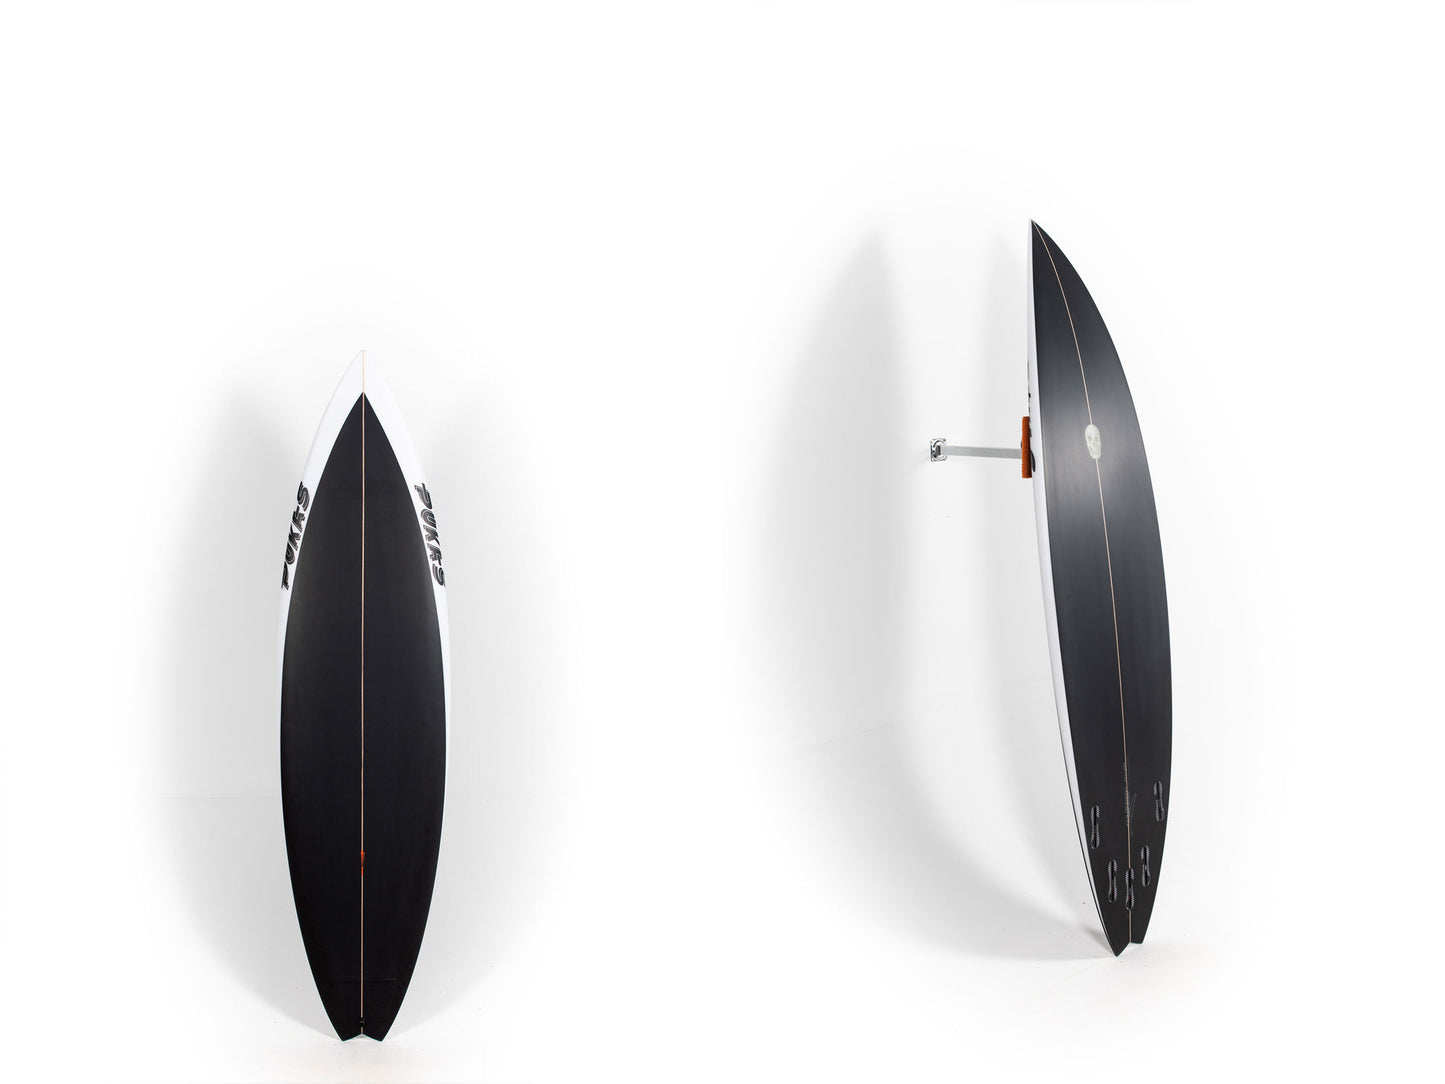 Pukas Surfboard - WATER LION ULTRA by Chris Christenson - 6'1” x 